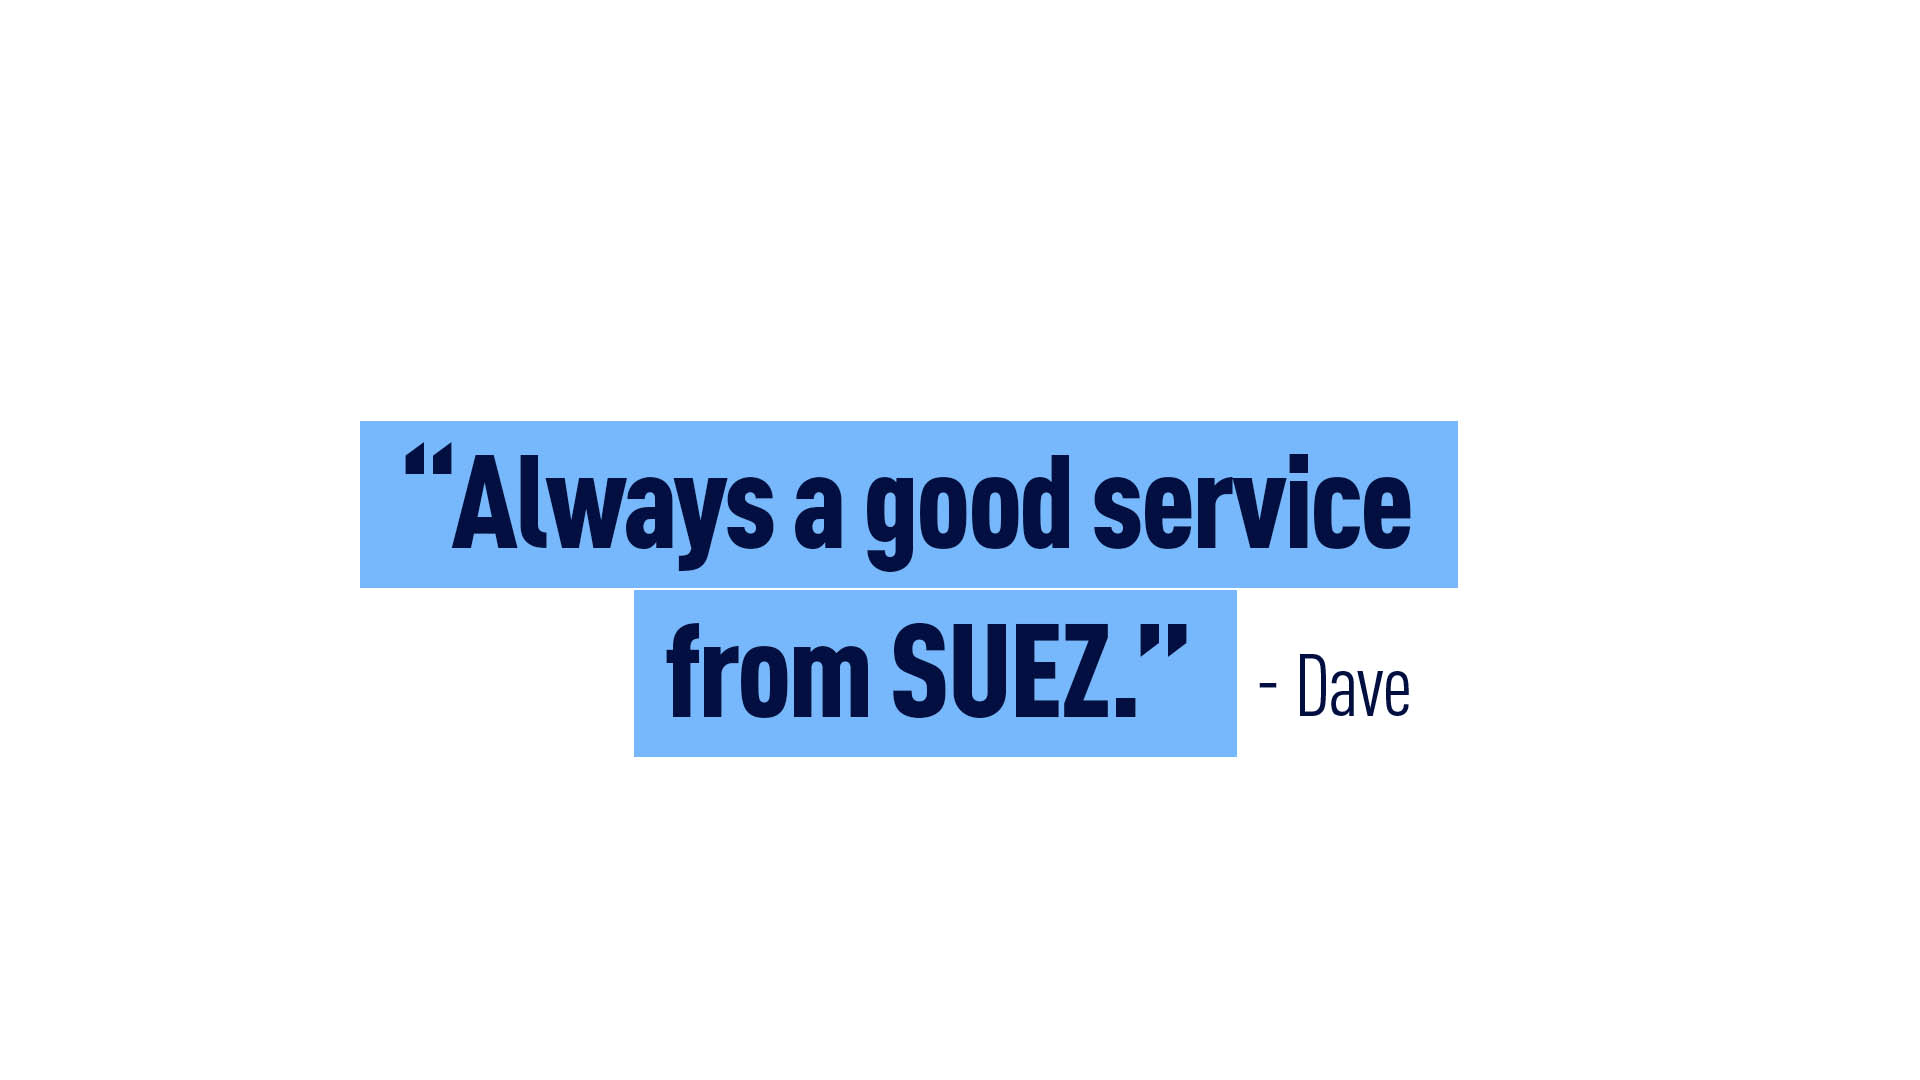 “Always a good service from SUEZ.” - Dave